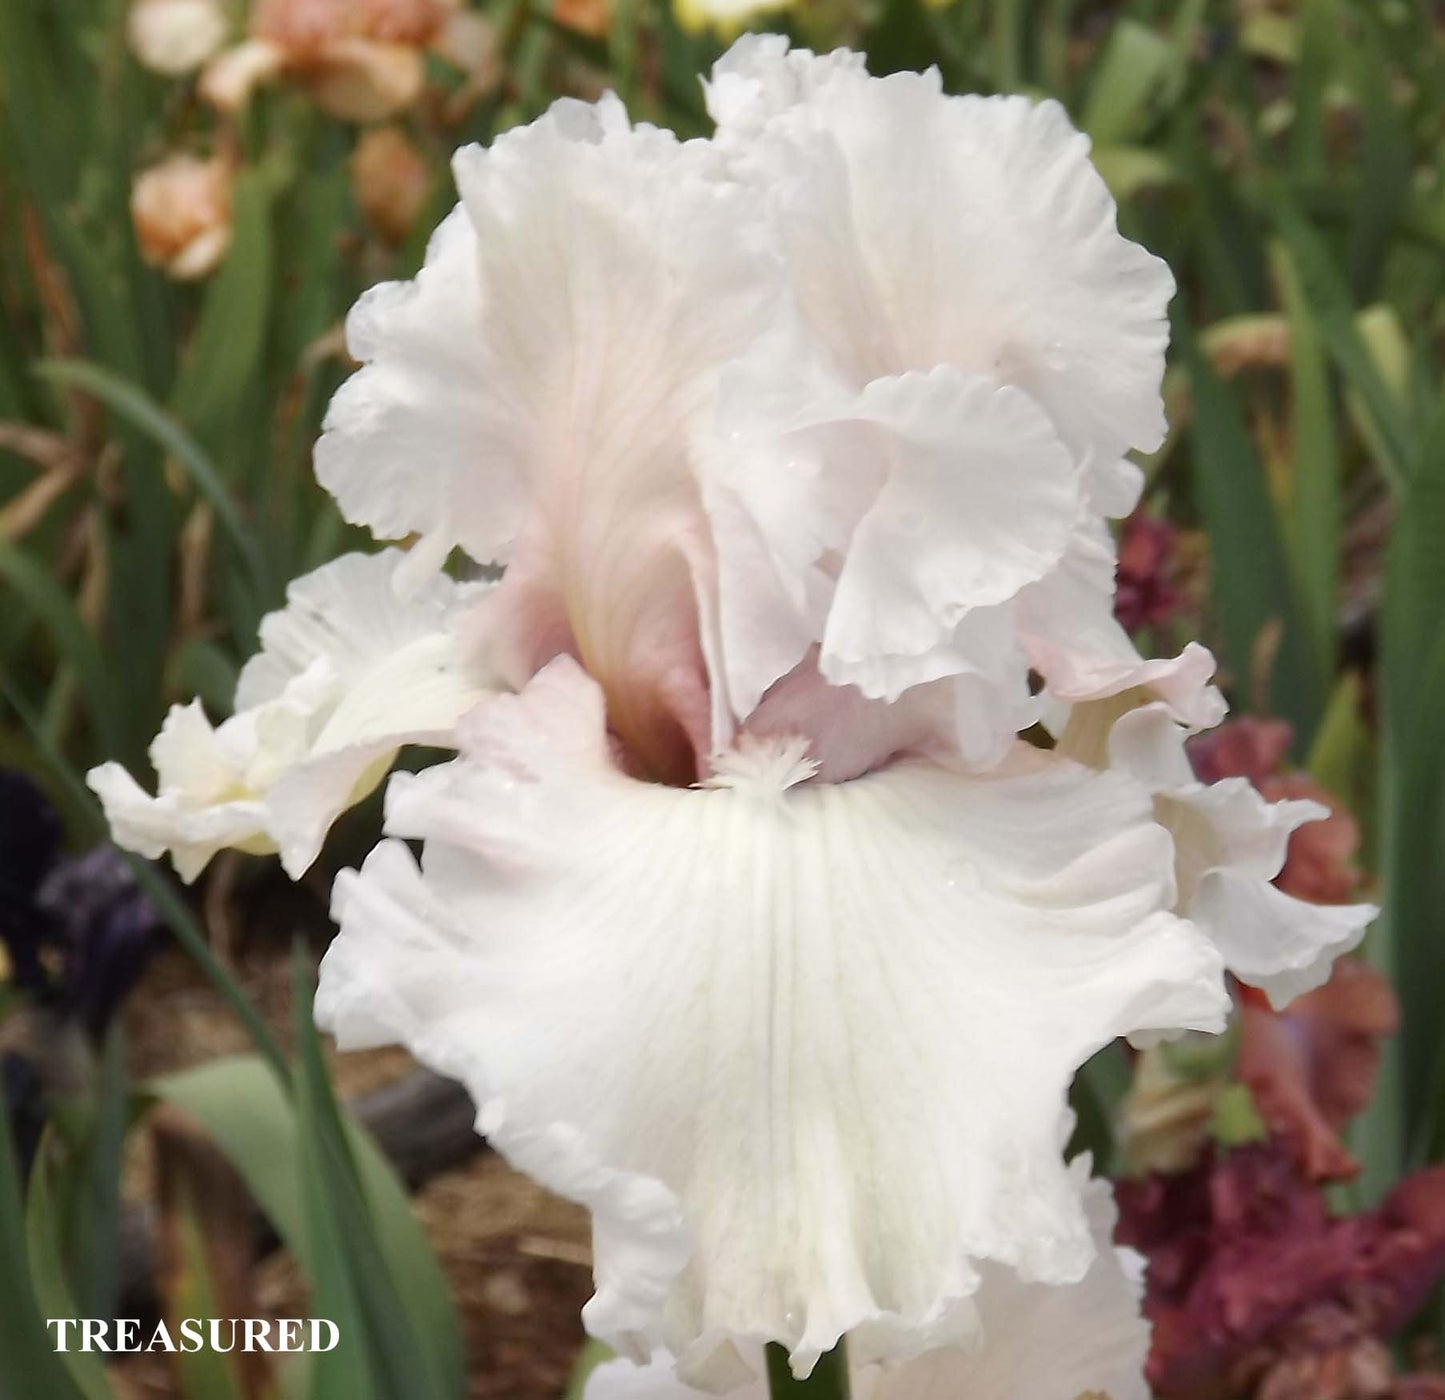 Treasured - Tall Bearded Iris